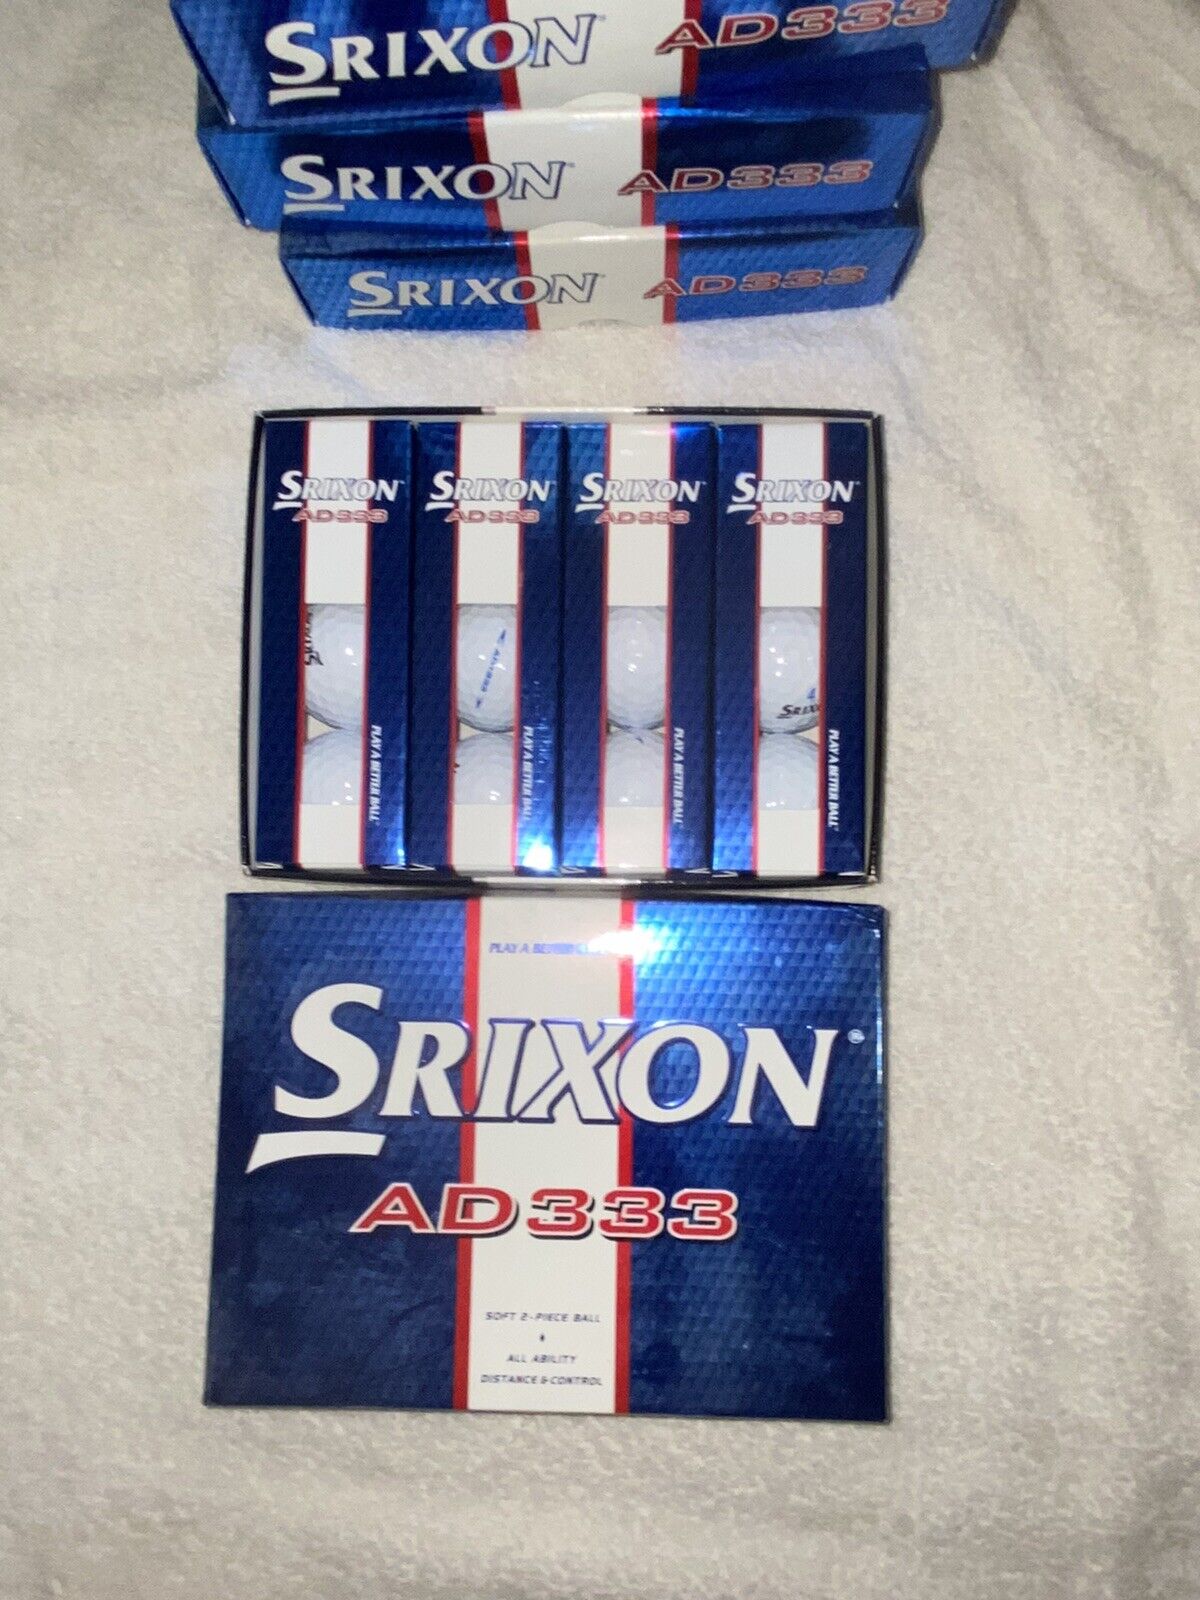 SRIXON AD333 Soft 2Piece One Dozen New Old Stock  #2